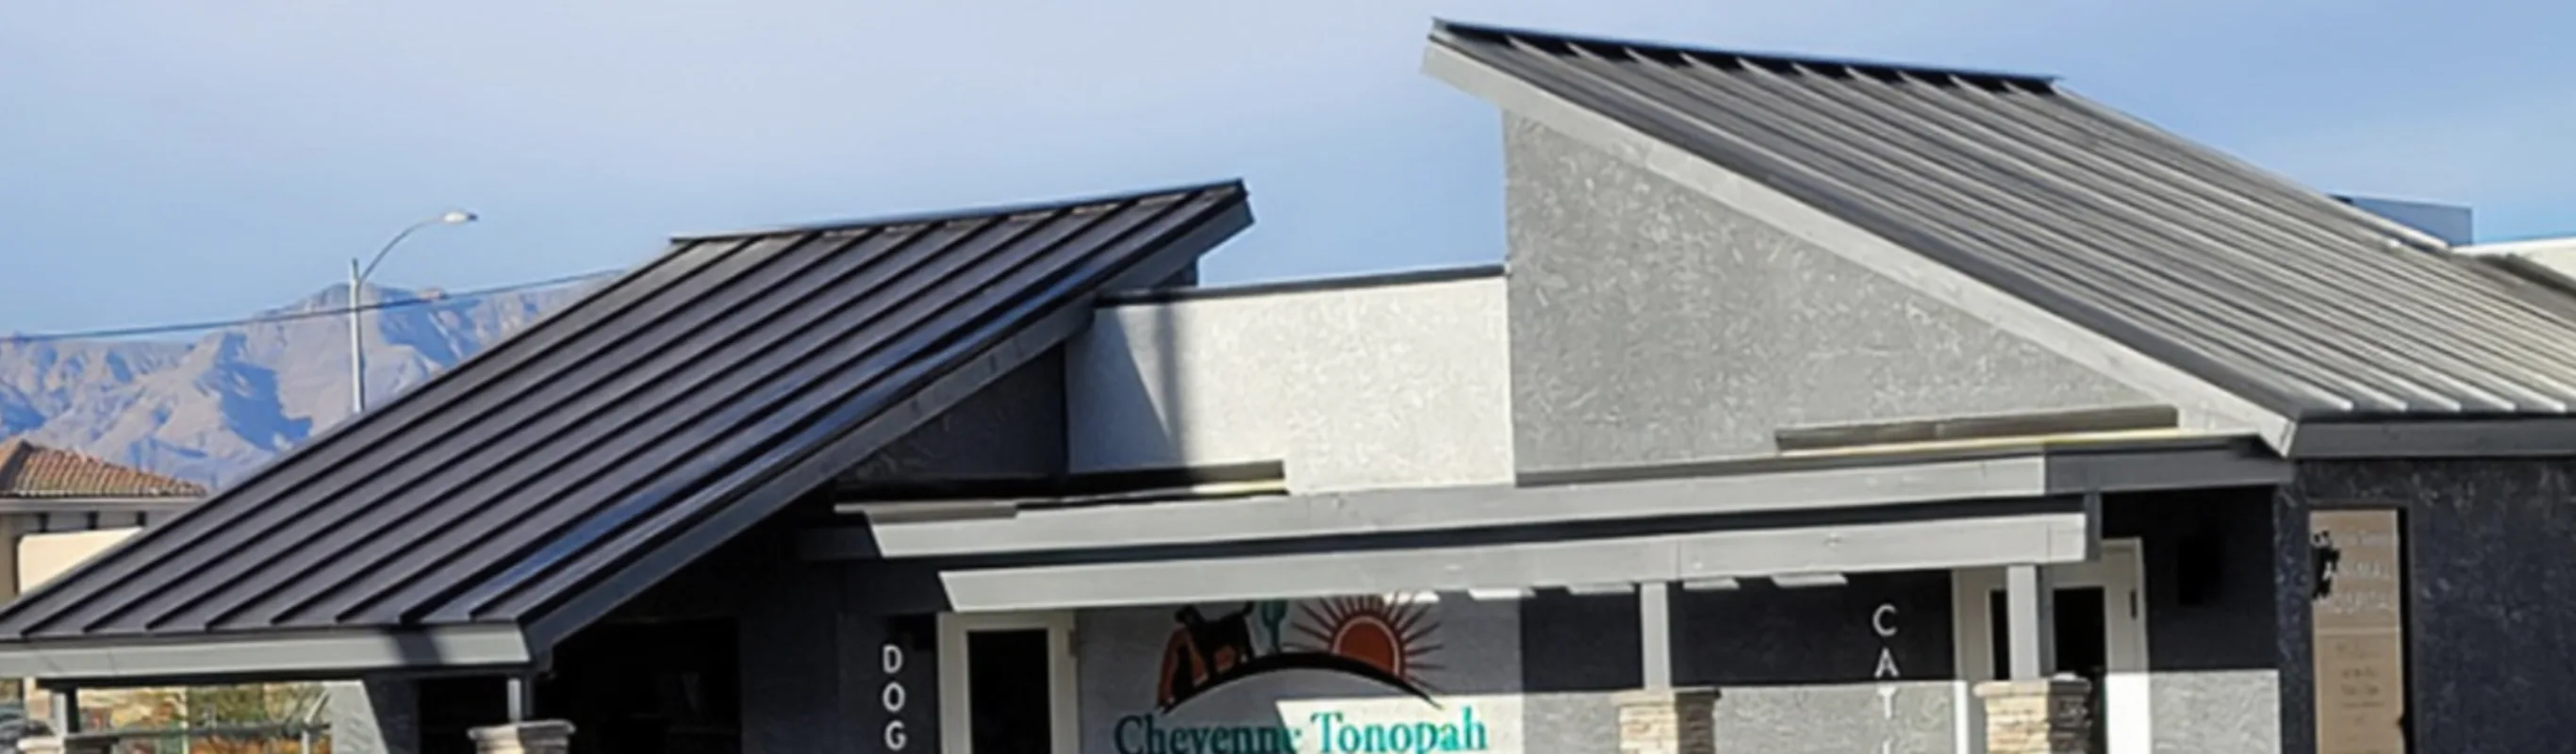 The exterior of Cheyenne Tonopah Animal Hospital